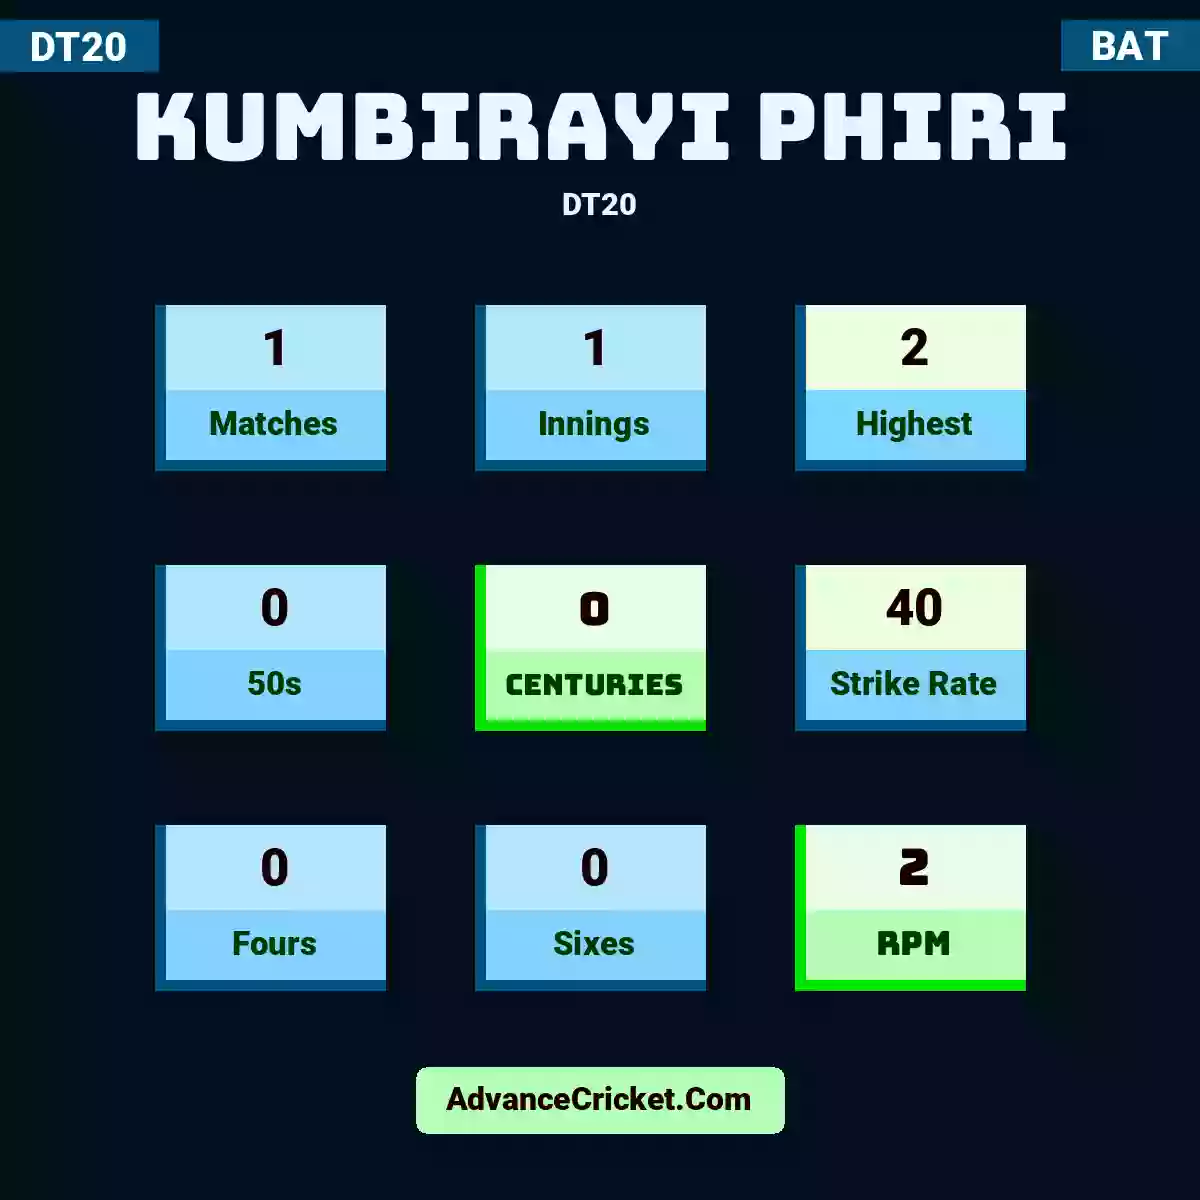 Kumbirayi Phiri DT20 , Kumbirayi Phiri played 1 matches, scored 2 runs as highest, 0 half-centuries, and 0 centuries, with a strike rate of 40. K.Phiri hit 0 fours and 0 sixes, with an RPM of 2.